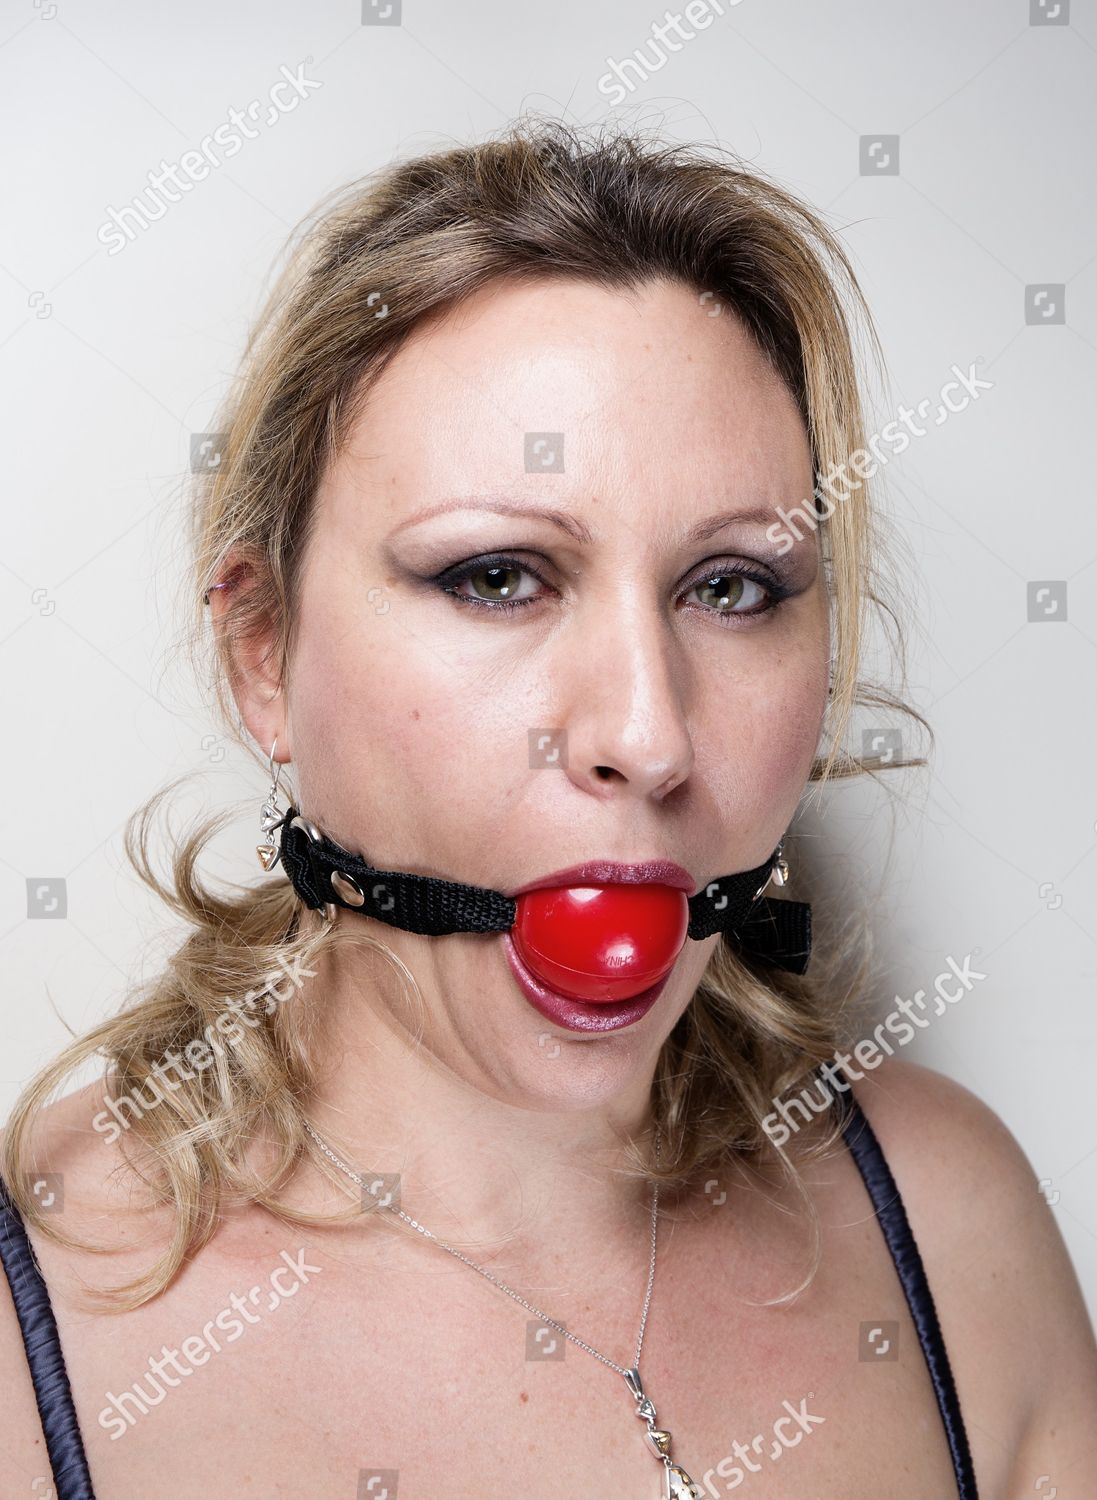 Ball Gag Porn - Charlotte Rose wearing ball gag Editorial Stock Photo ...